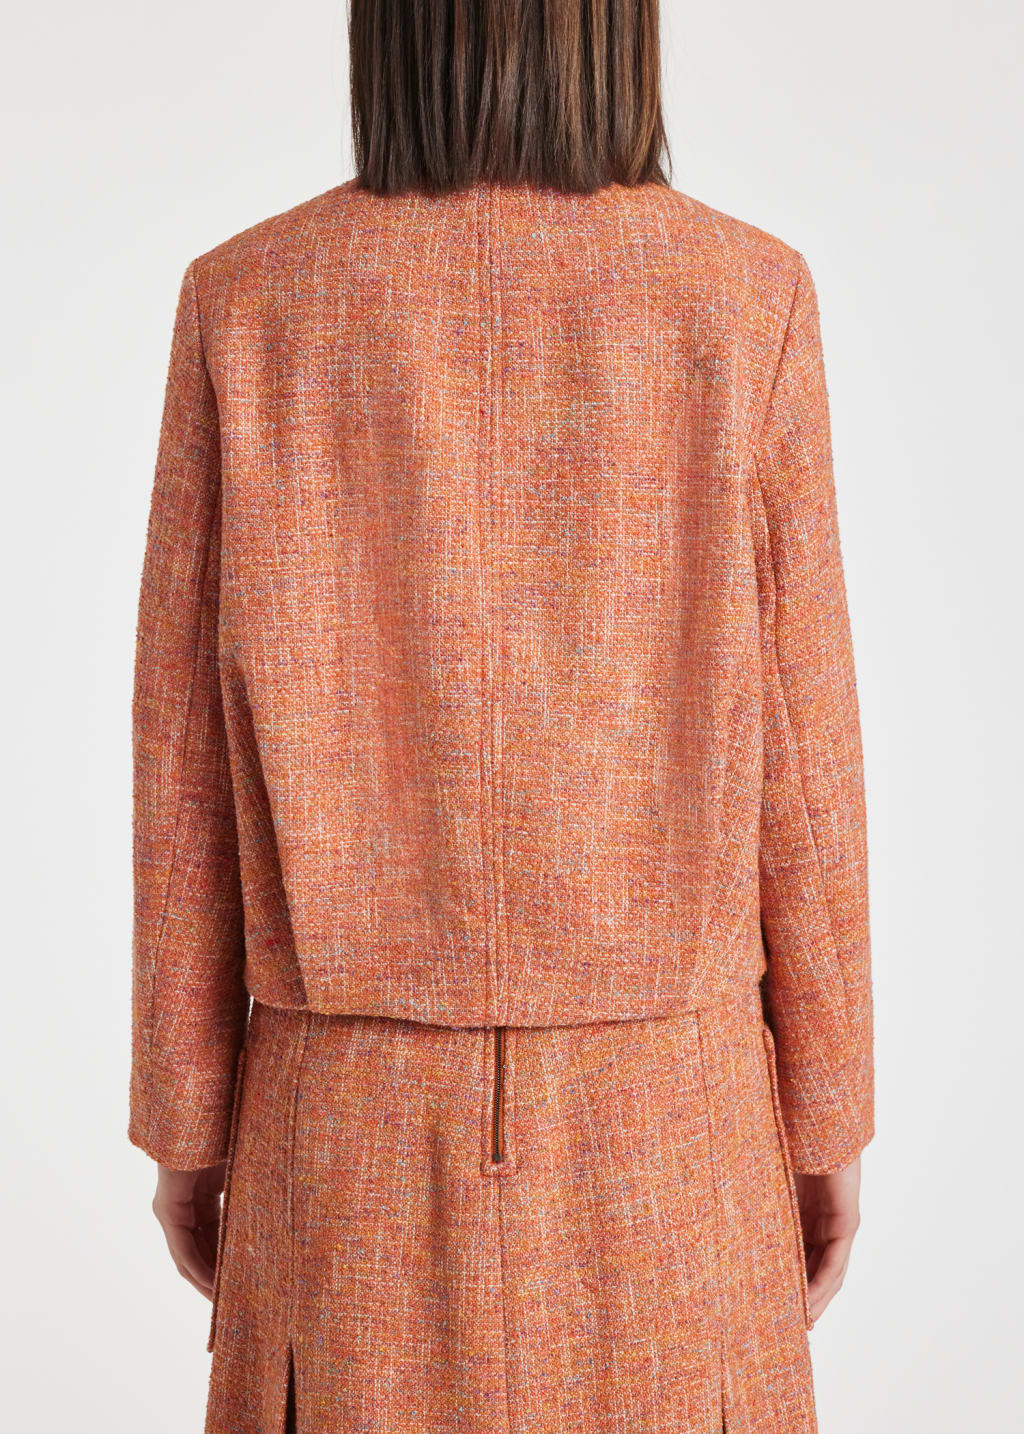 Model View - Women's Orange Tweed Cocoon Jacket by Paul Smith